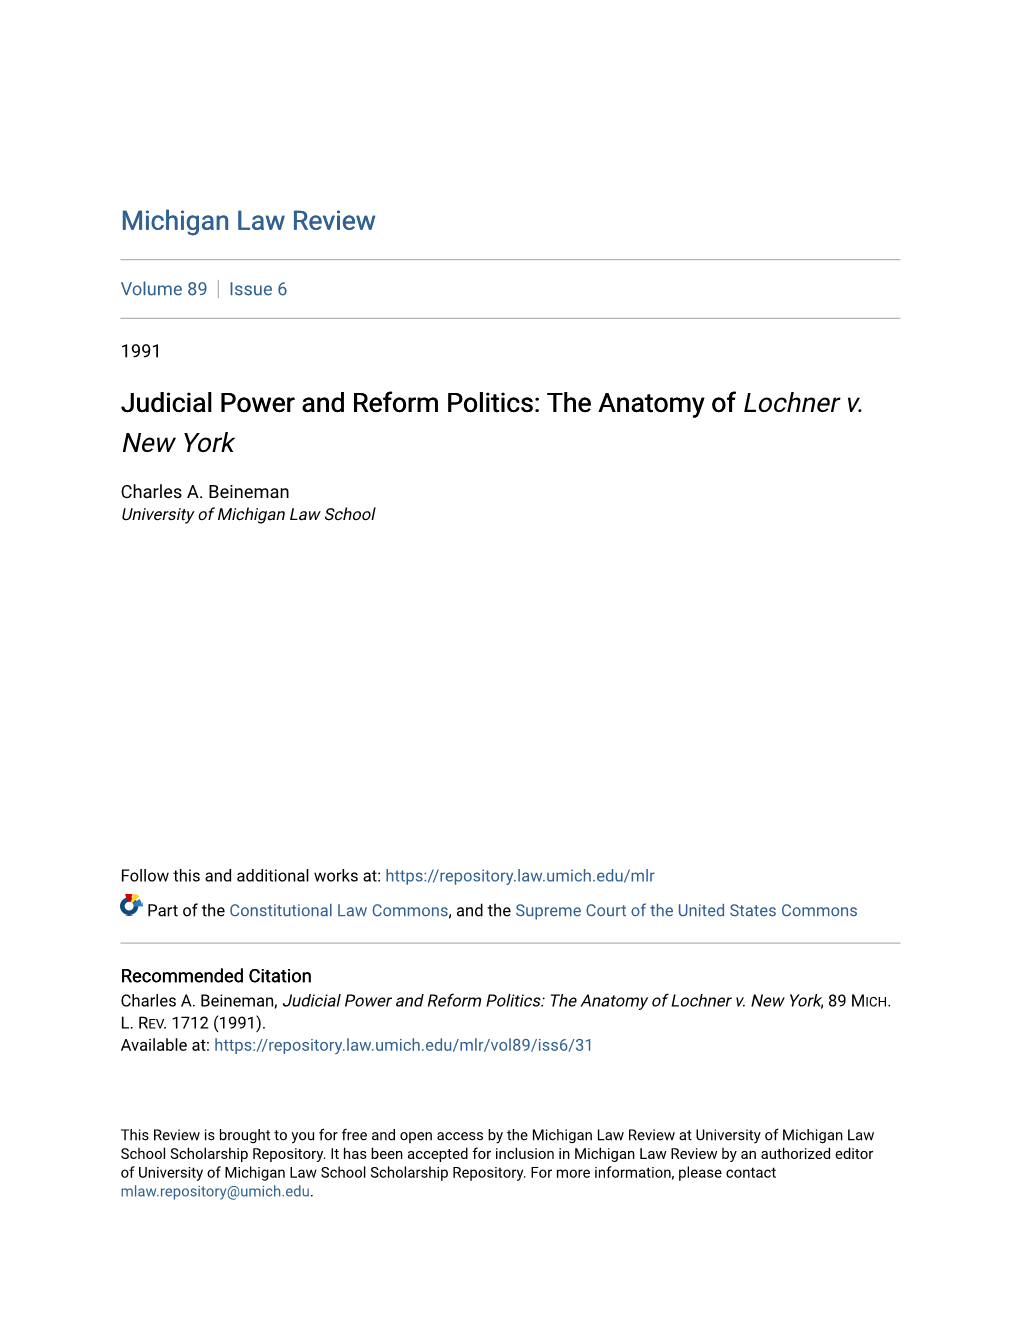 Judicial Power and Reform Politics: the Anatomy of Lochner V